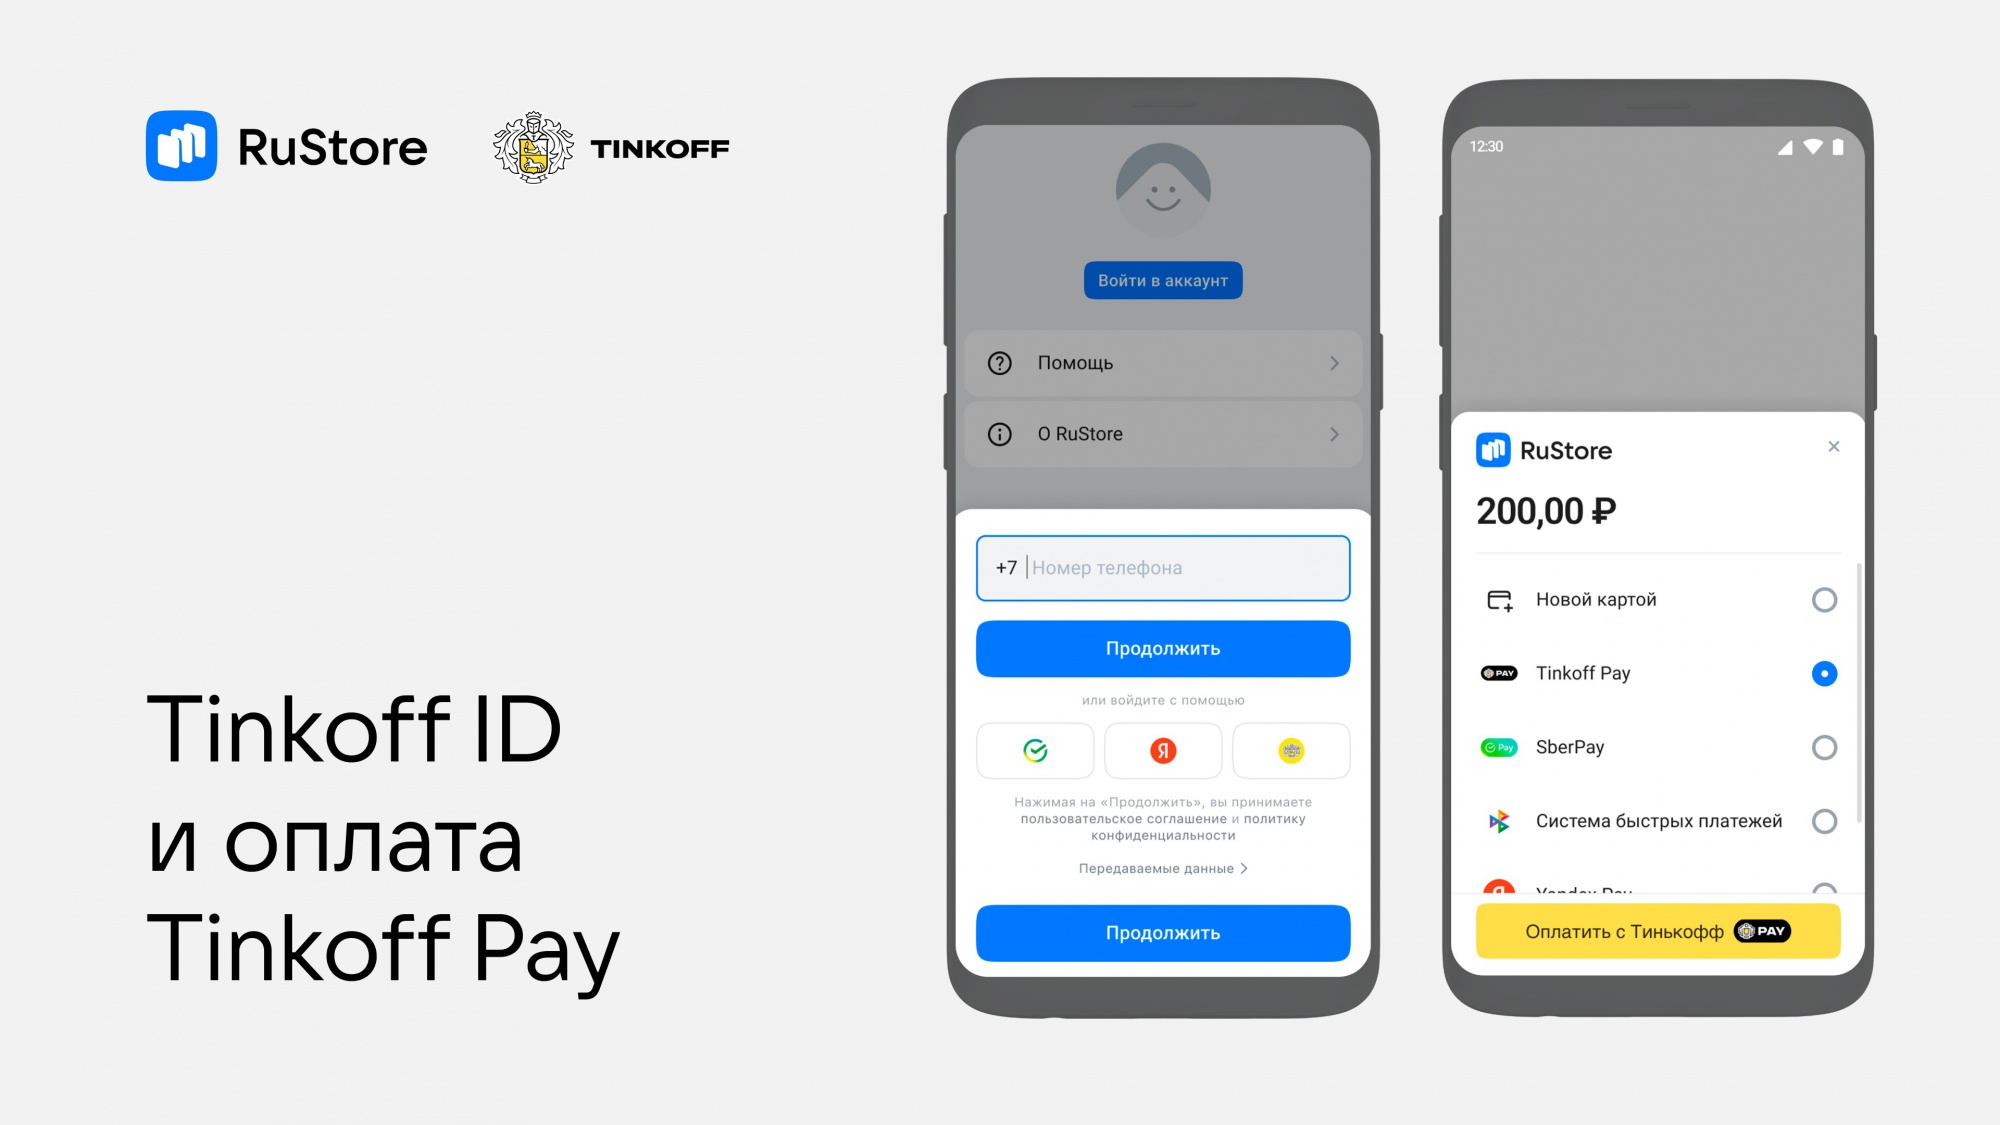 Тинькофф ID и оплата через Tinkoff Pay появились в RuStore